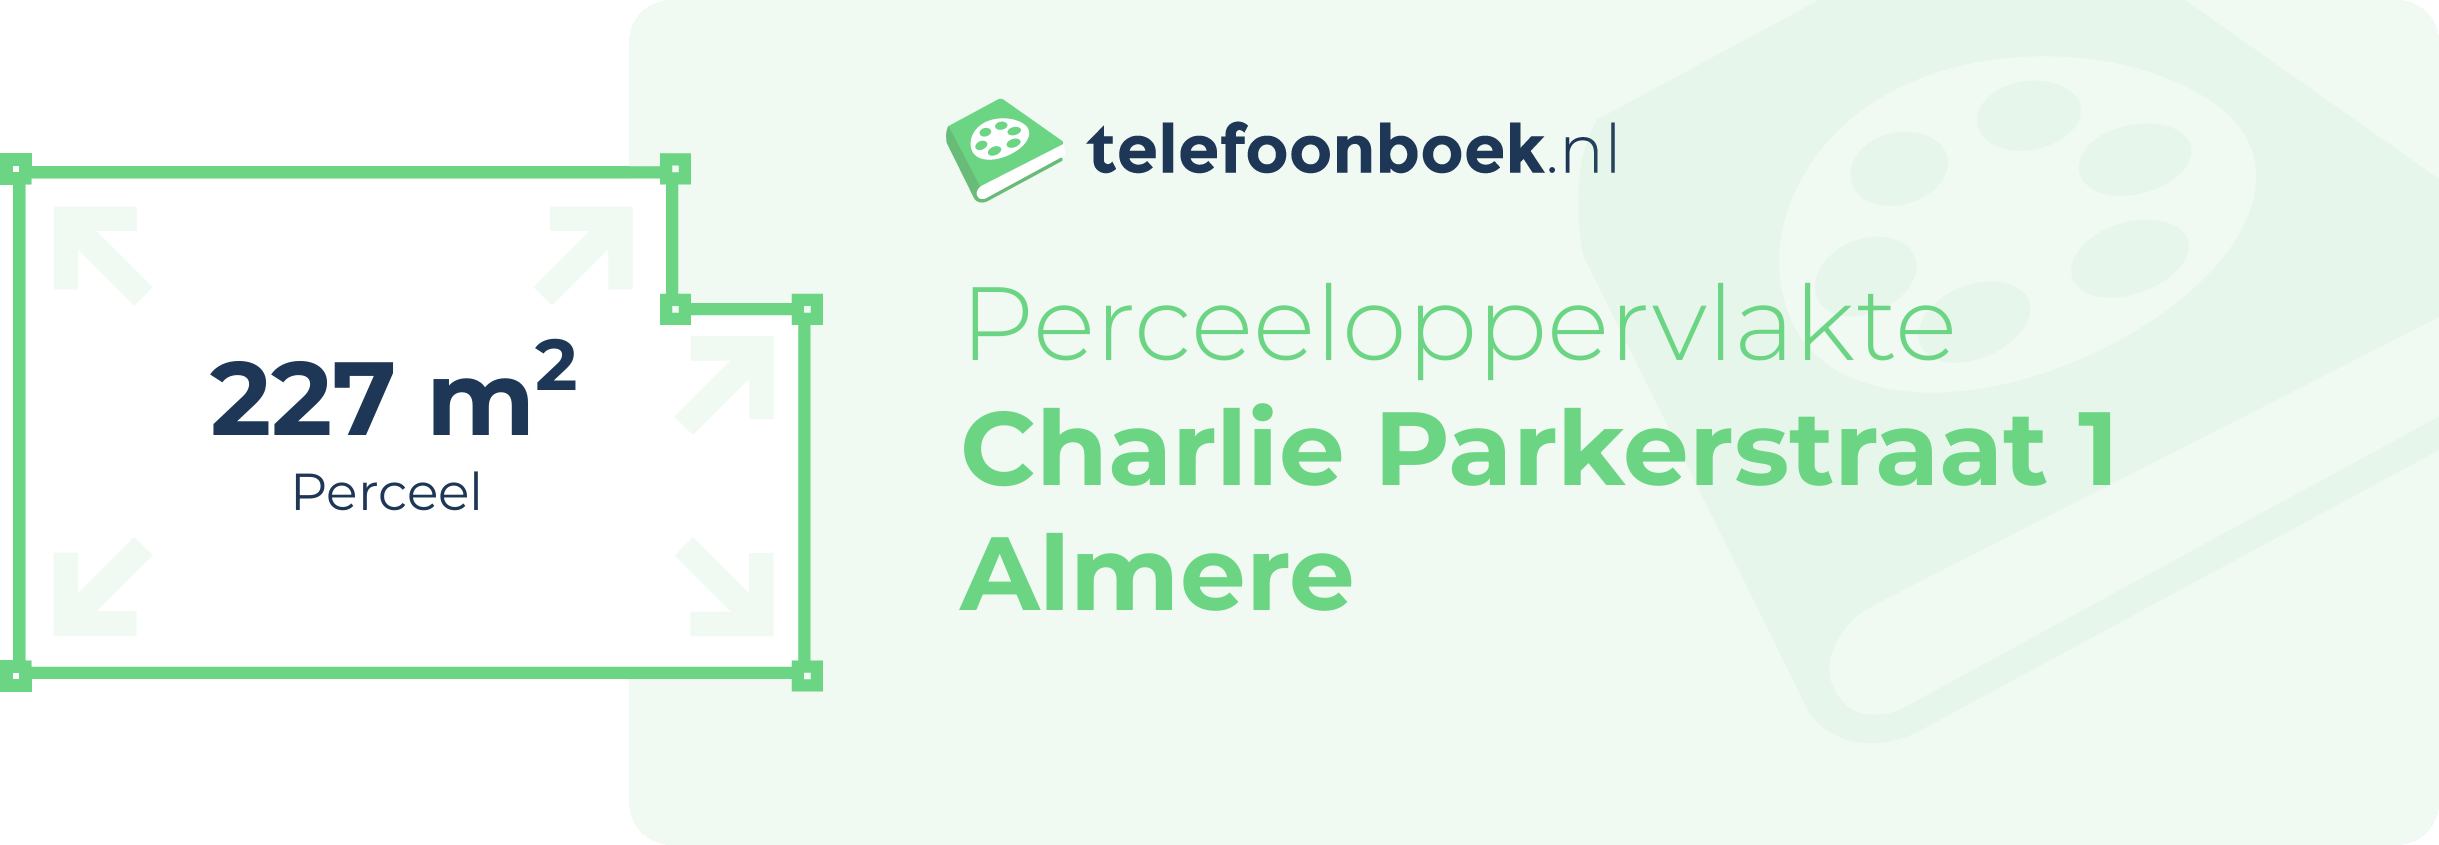 Perceeloppervlakte Charlie Parkerstraat 1 Almere